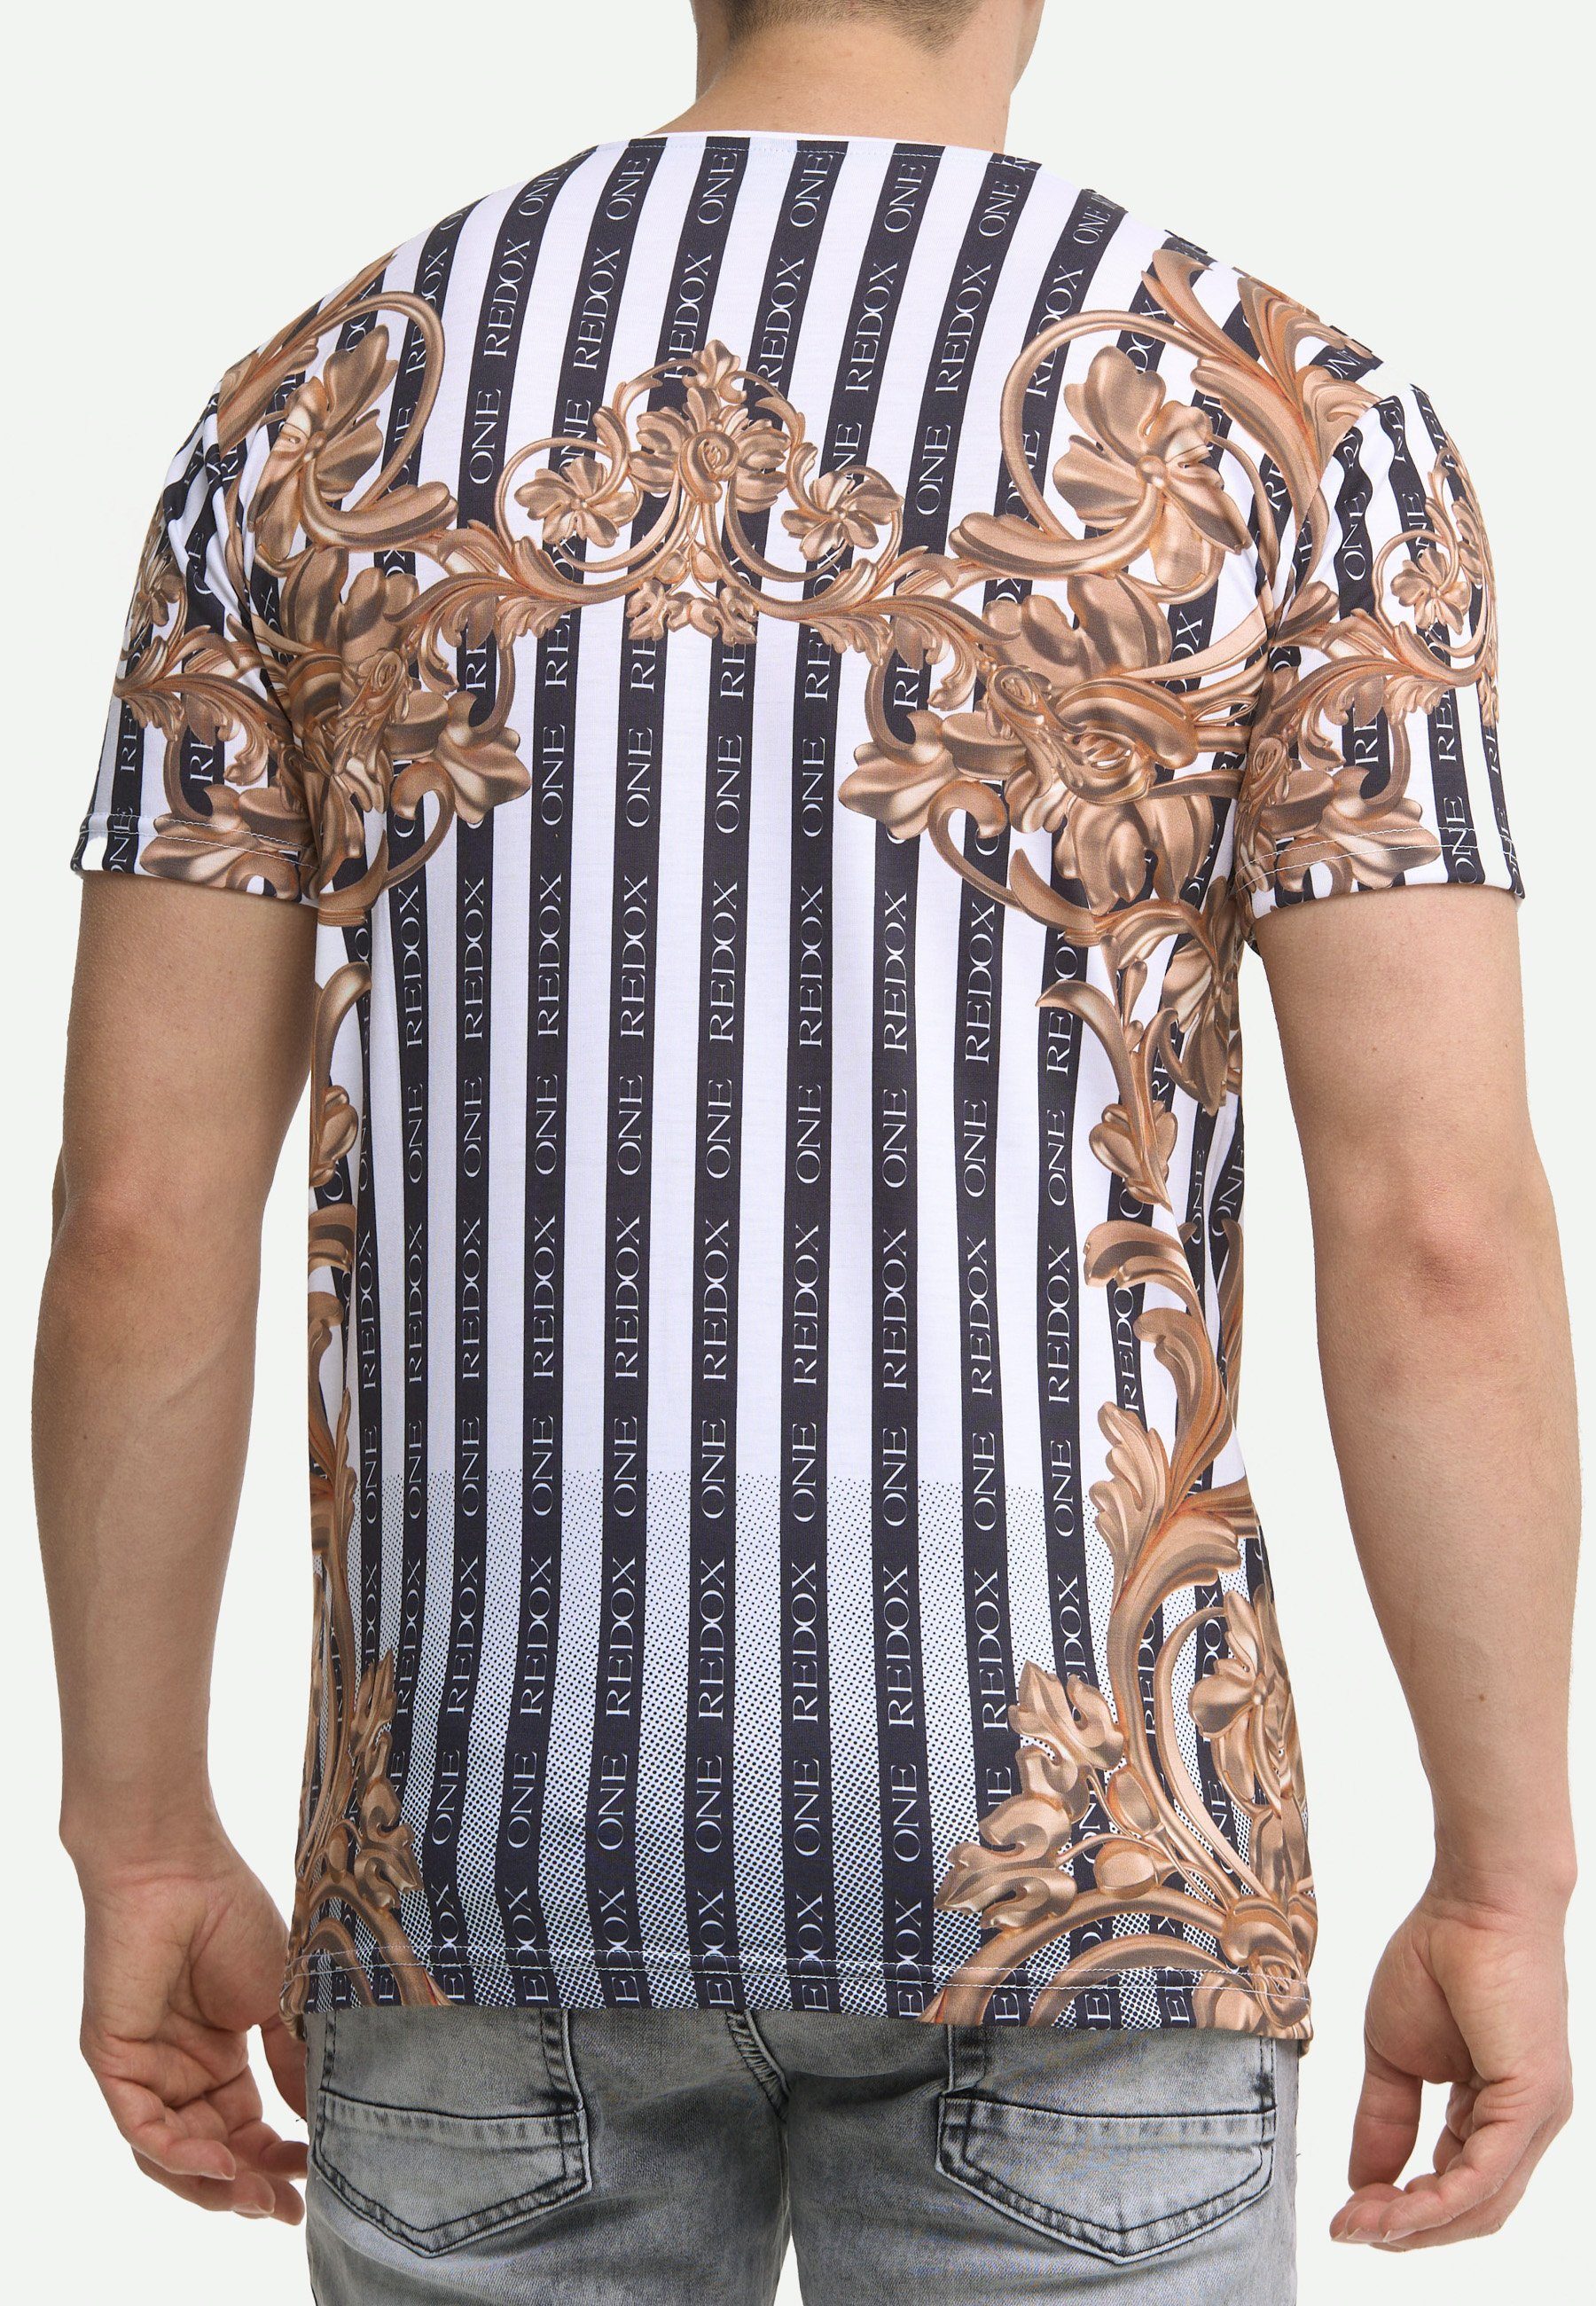 Designer Printshirt (Longsleeve Code47 Shortsleev T-Shirt Shirt, Code47 1-tlg) Tee Oberteil Weiß Polo T-Shirt Herren